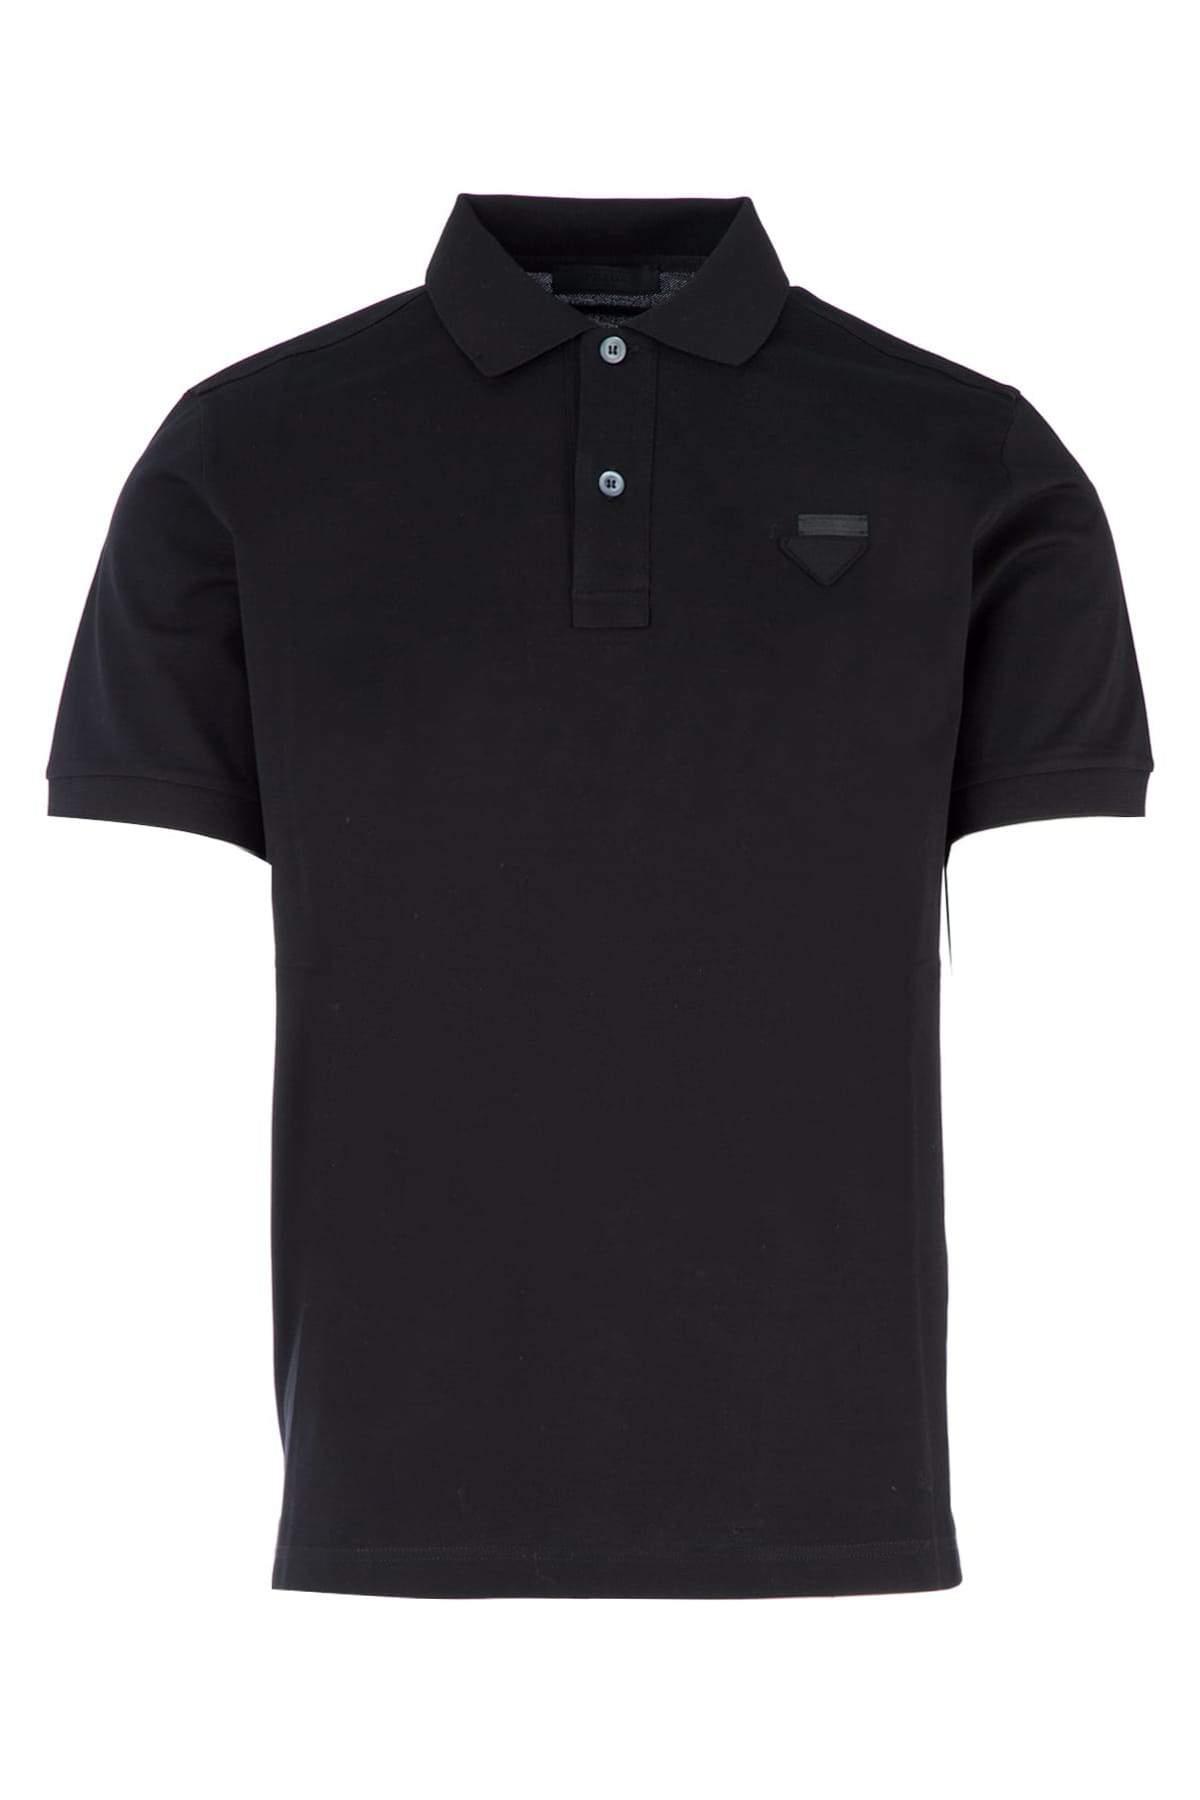 Prada Cotton Logo Polo Shirt in Black for Men - Lyst